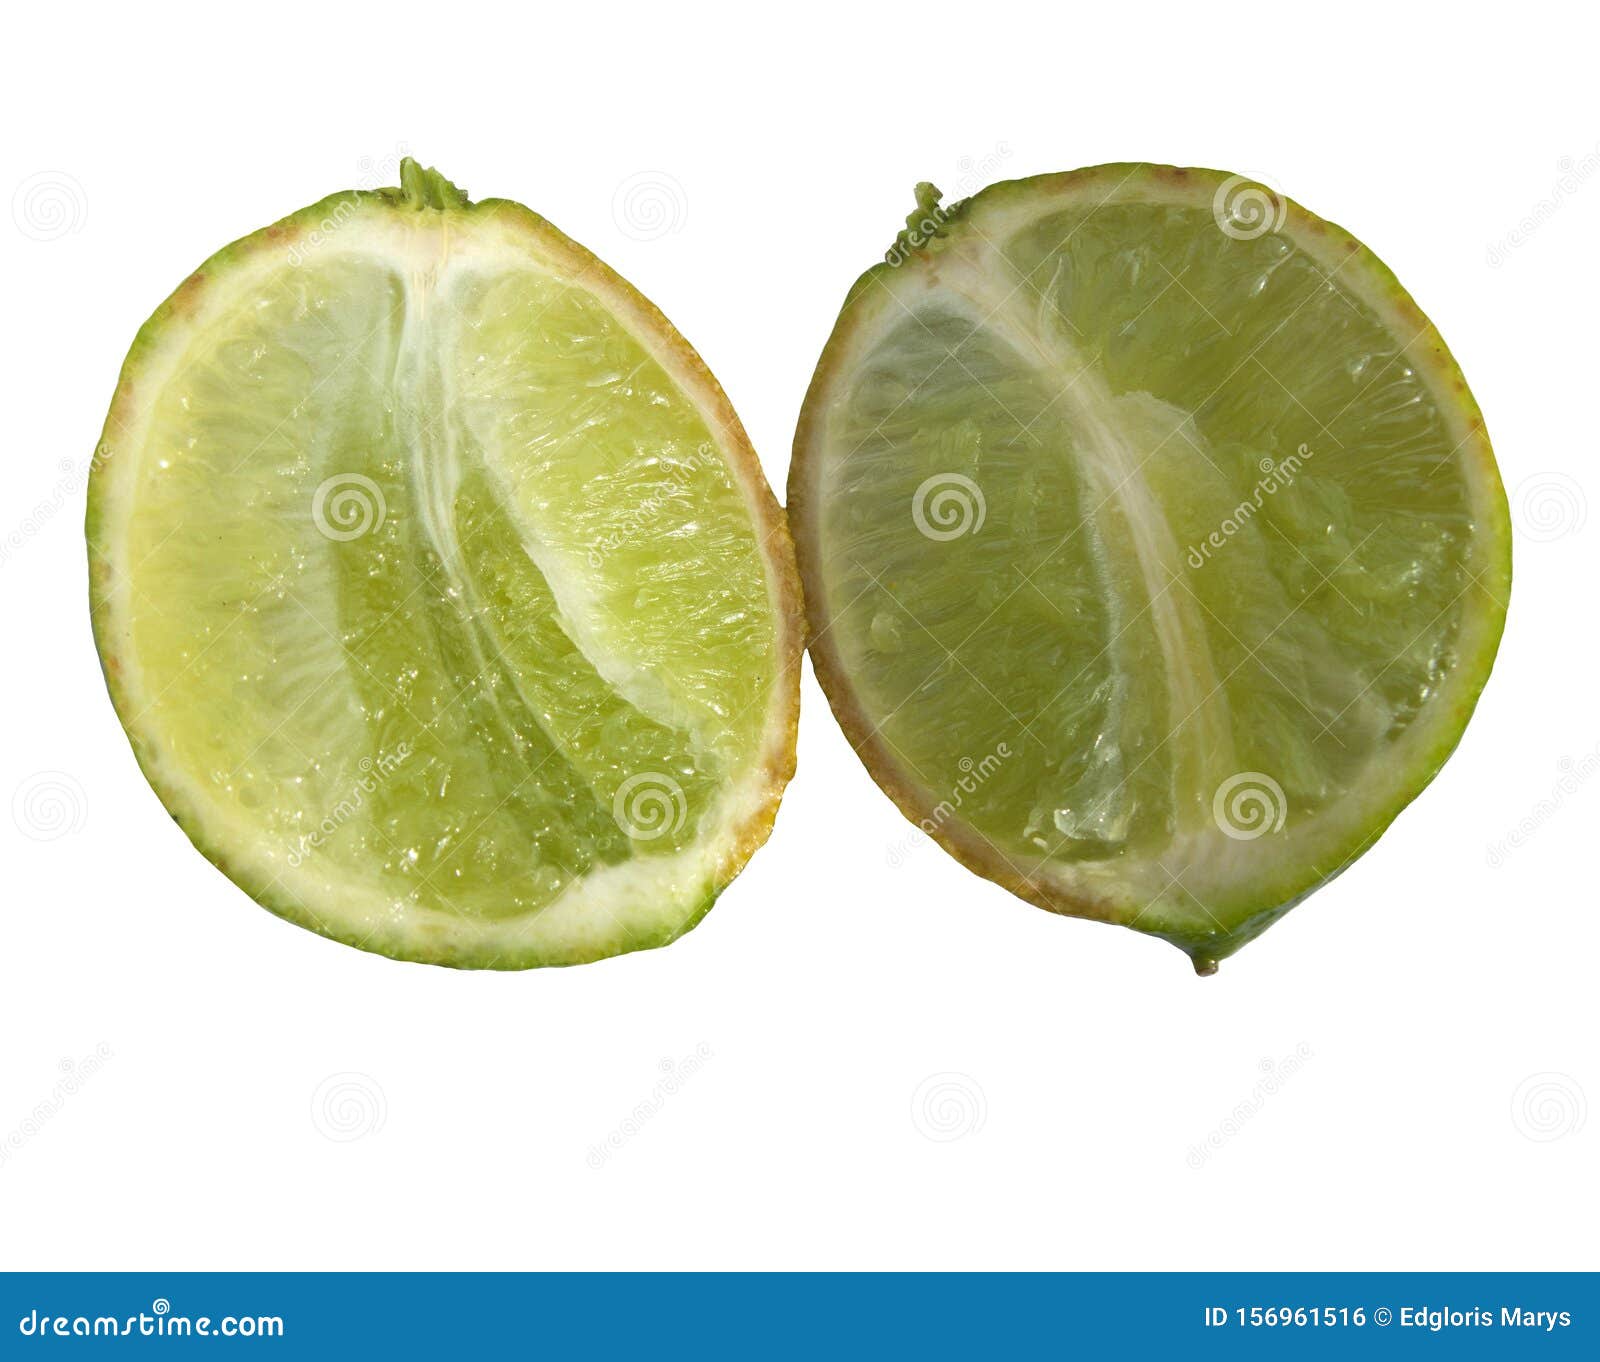  citrus lemon fruit heavely infected with citrus greening hlb